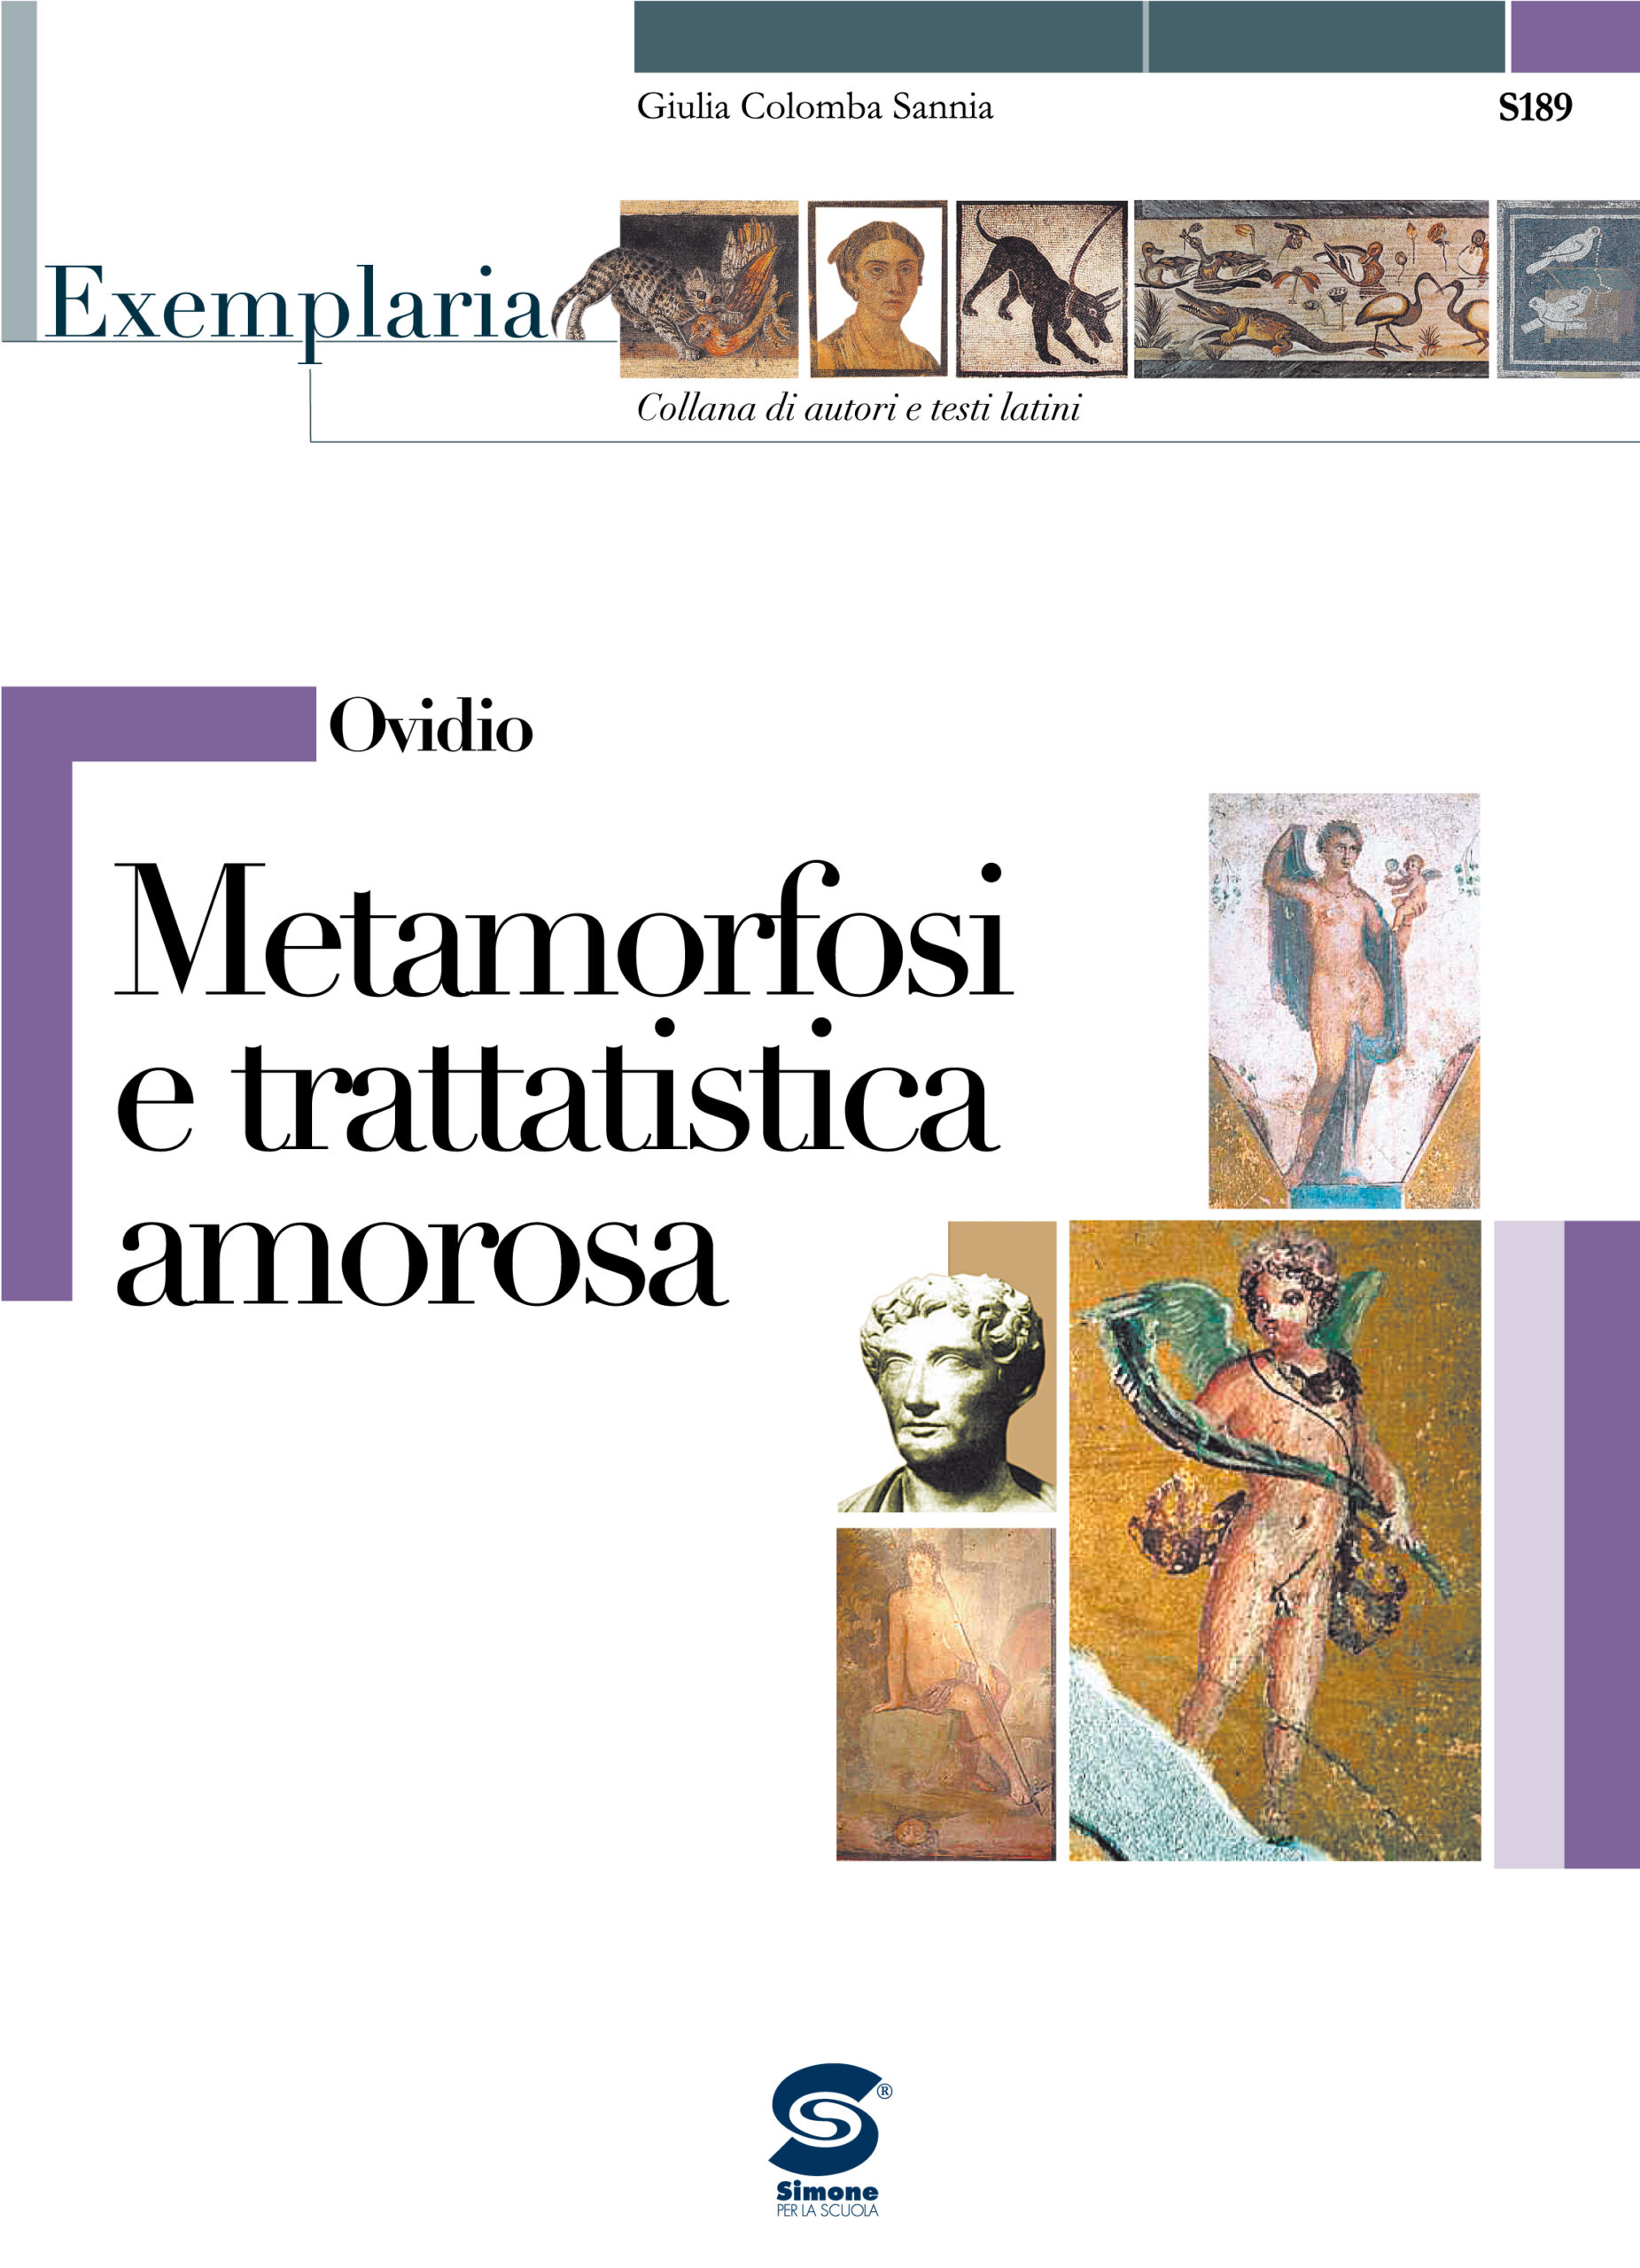 Ovidio - Metamorfosi e trattatistica amorosa - S189 - Simone Scuola